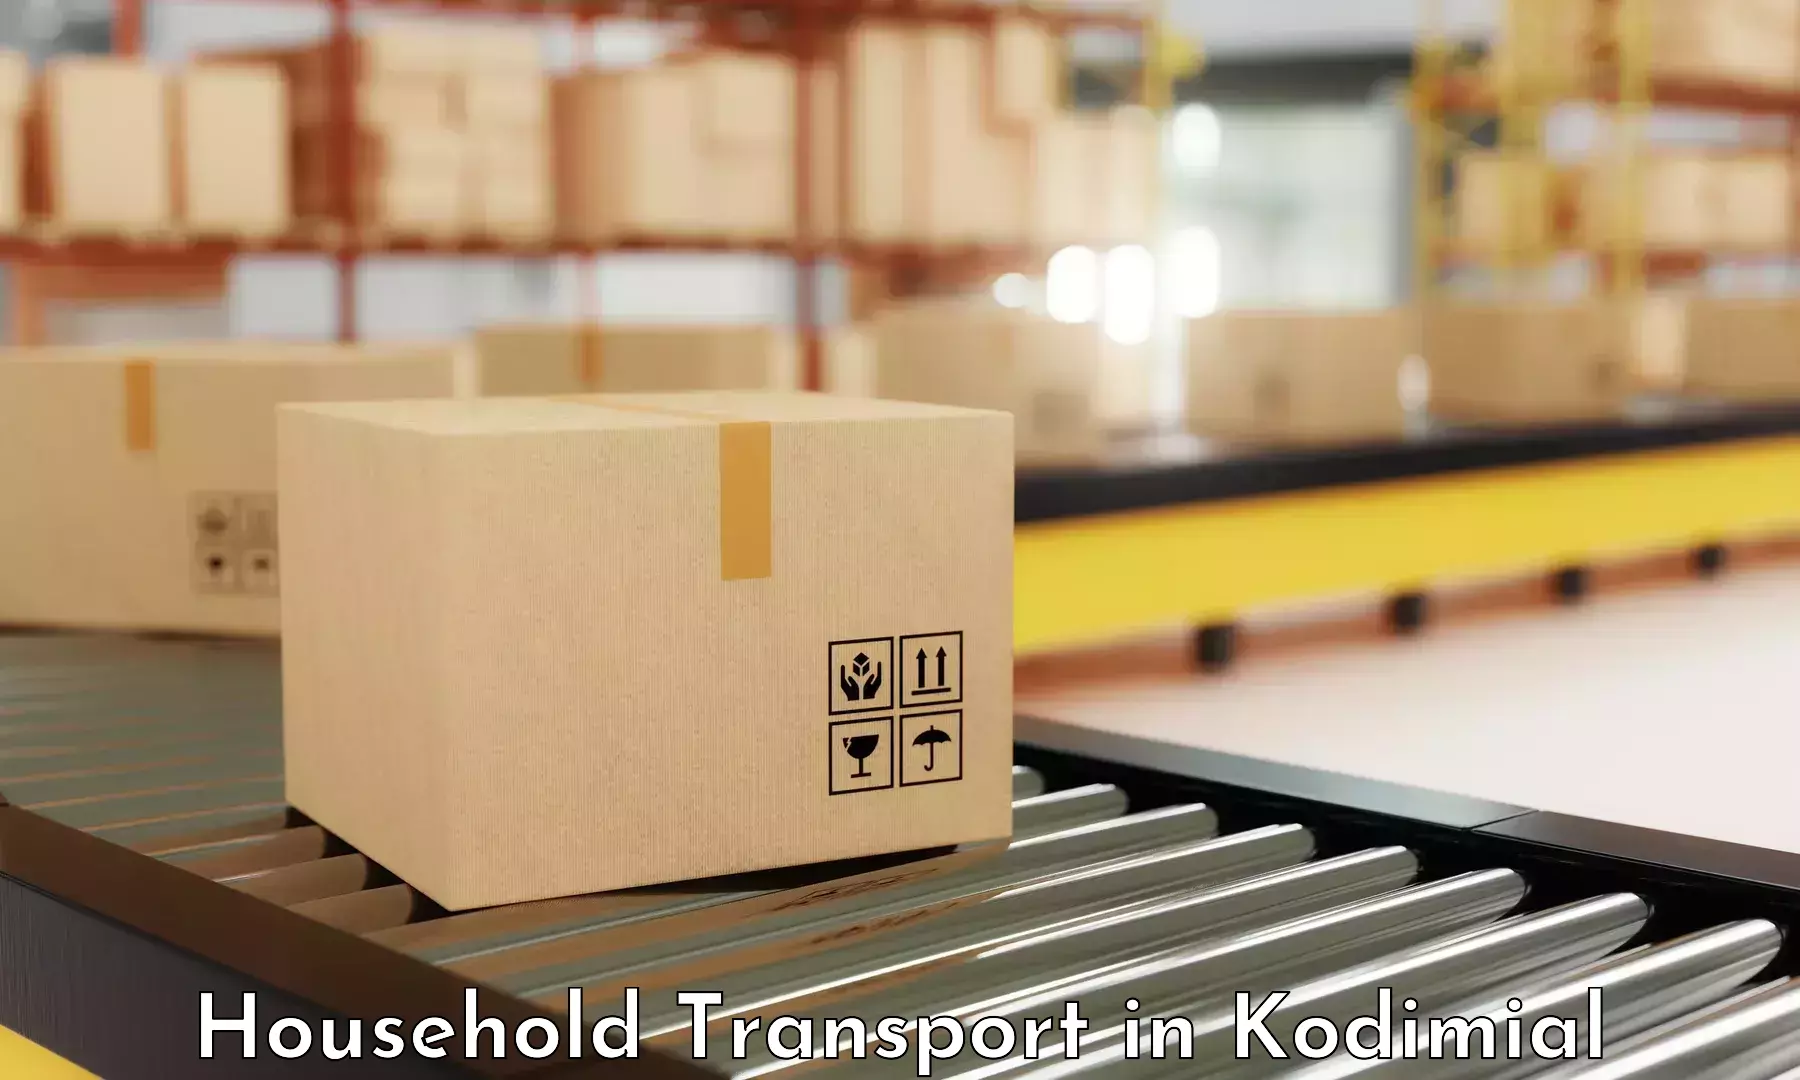 Household goods transporters in Kodimial